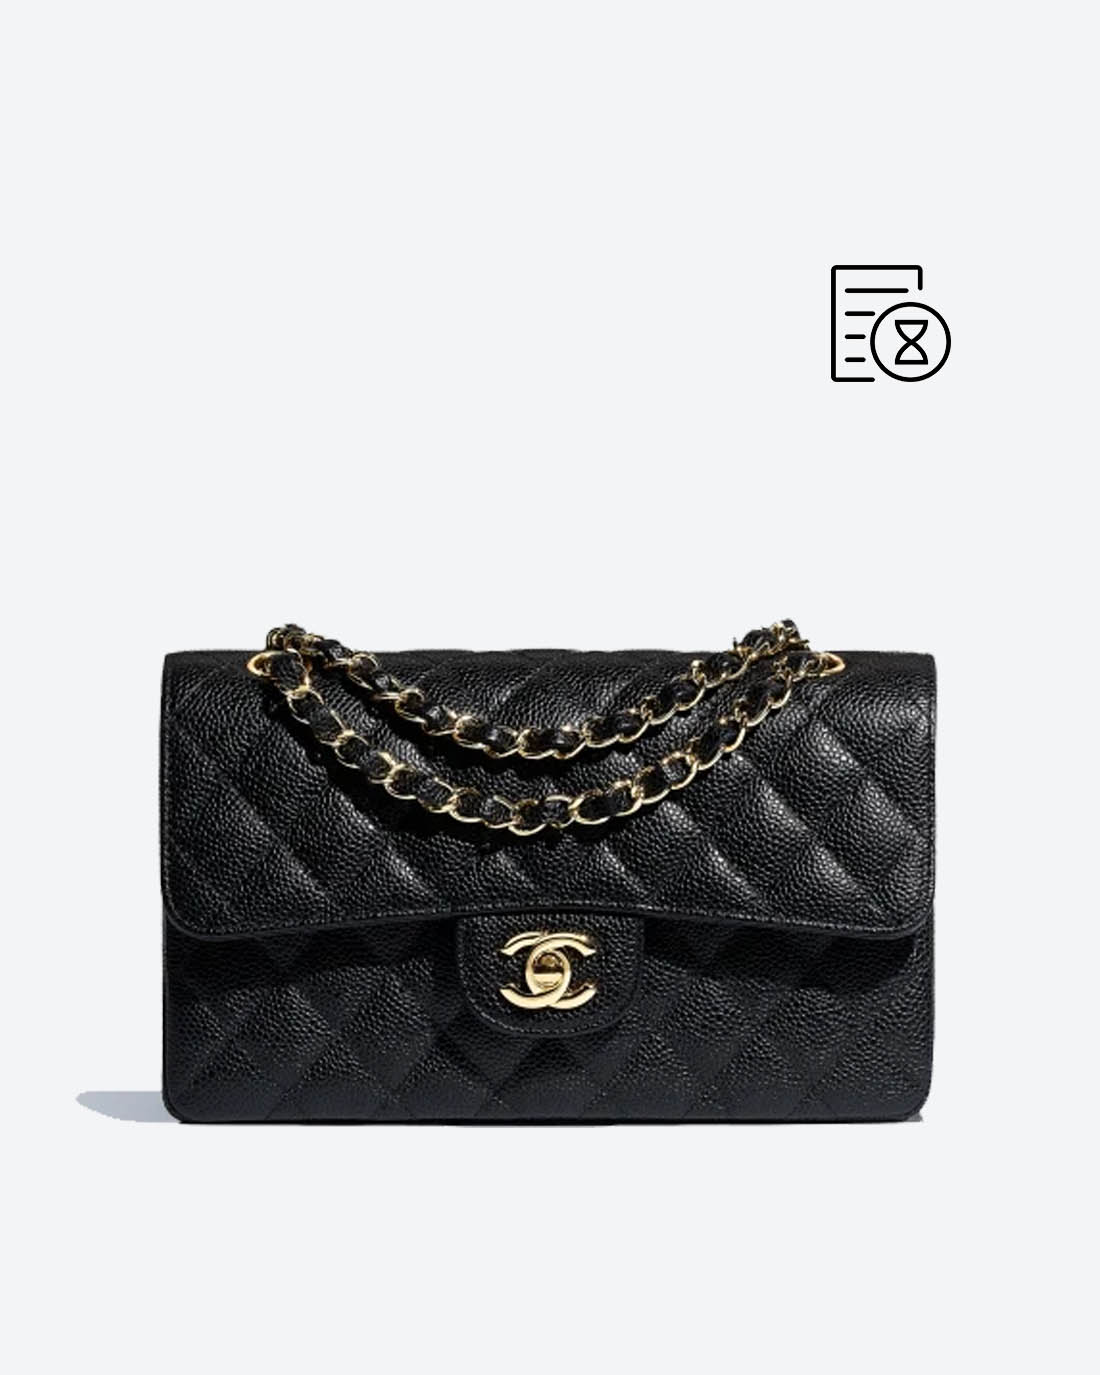 Chanel classic flap caviar black small